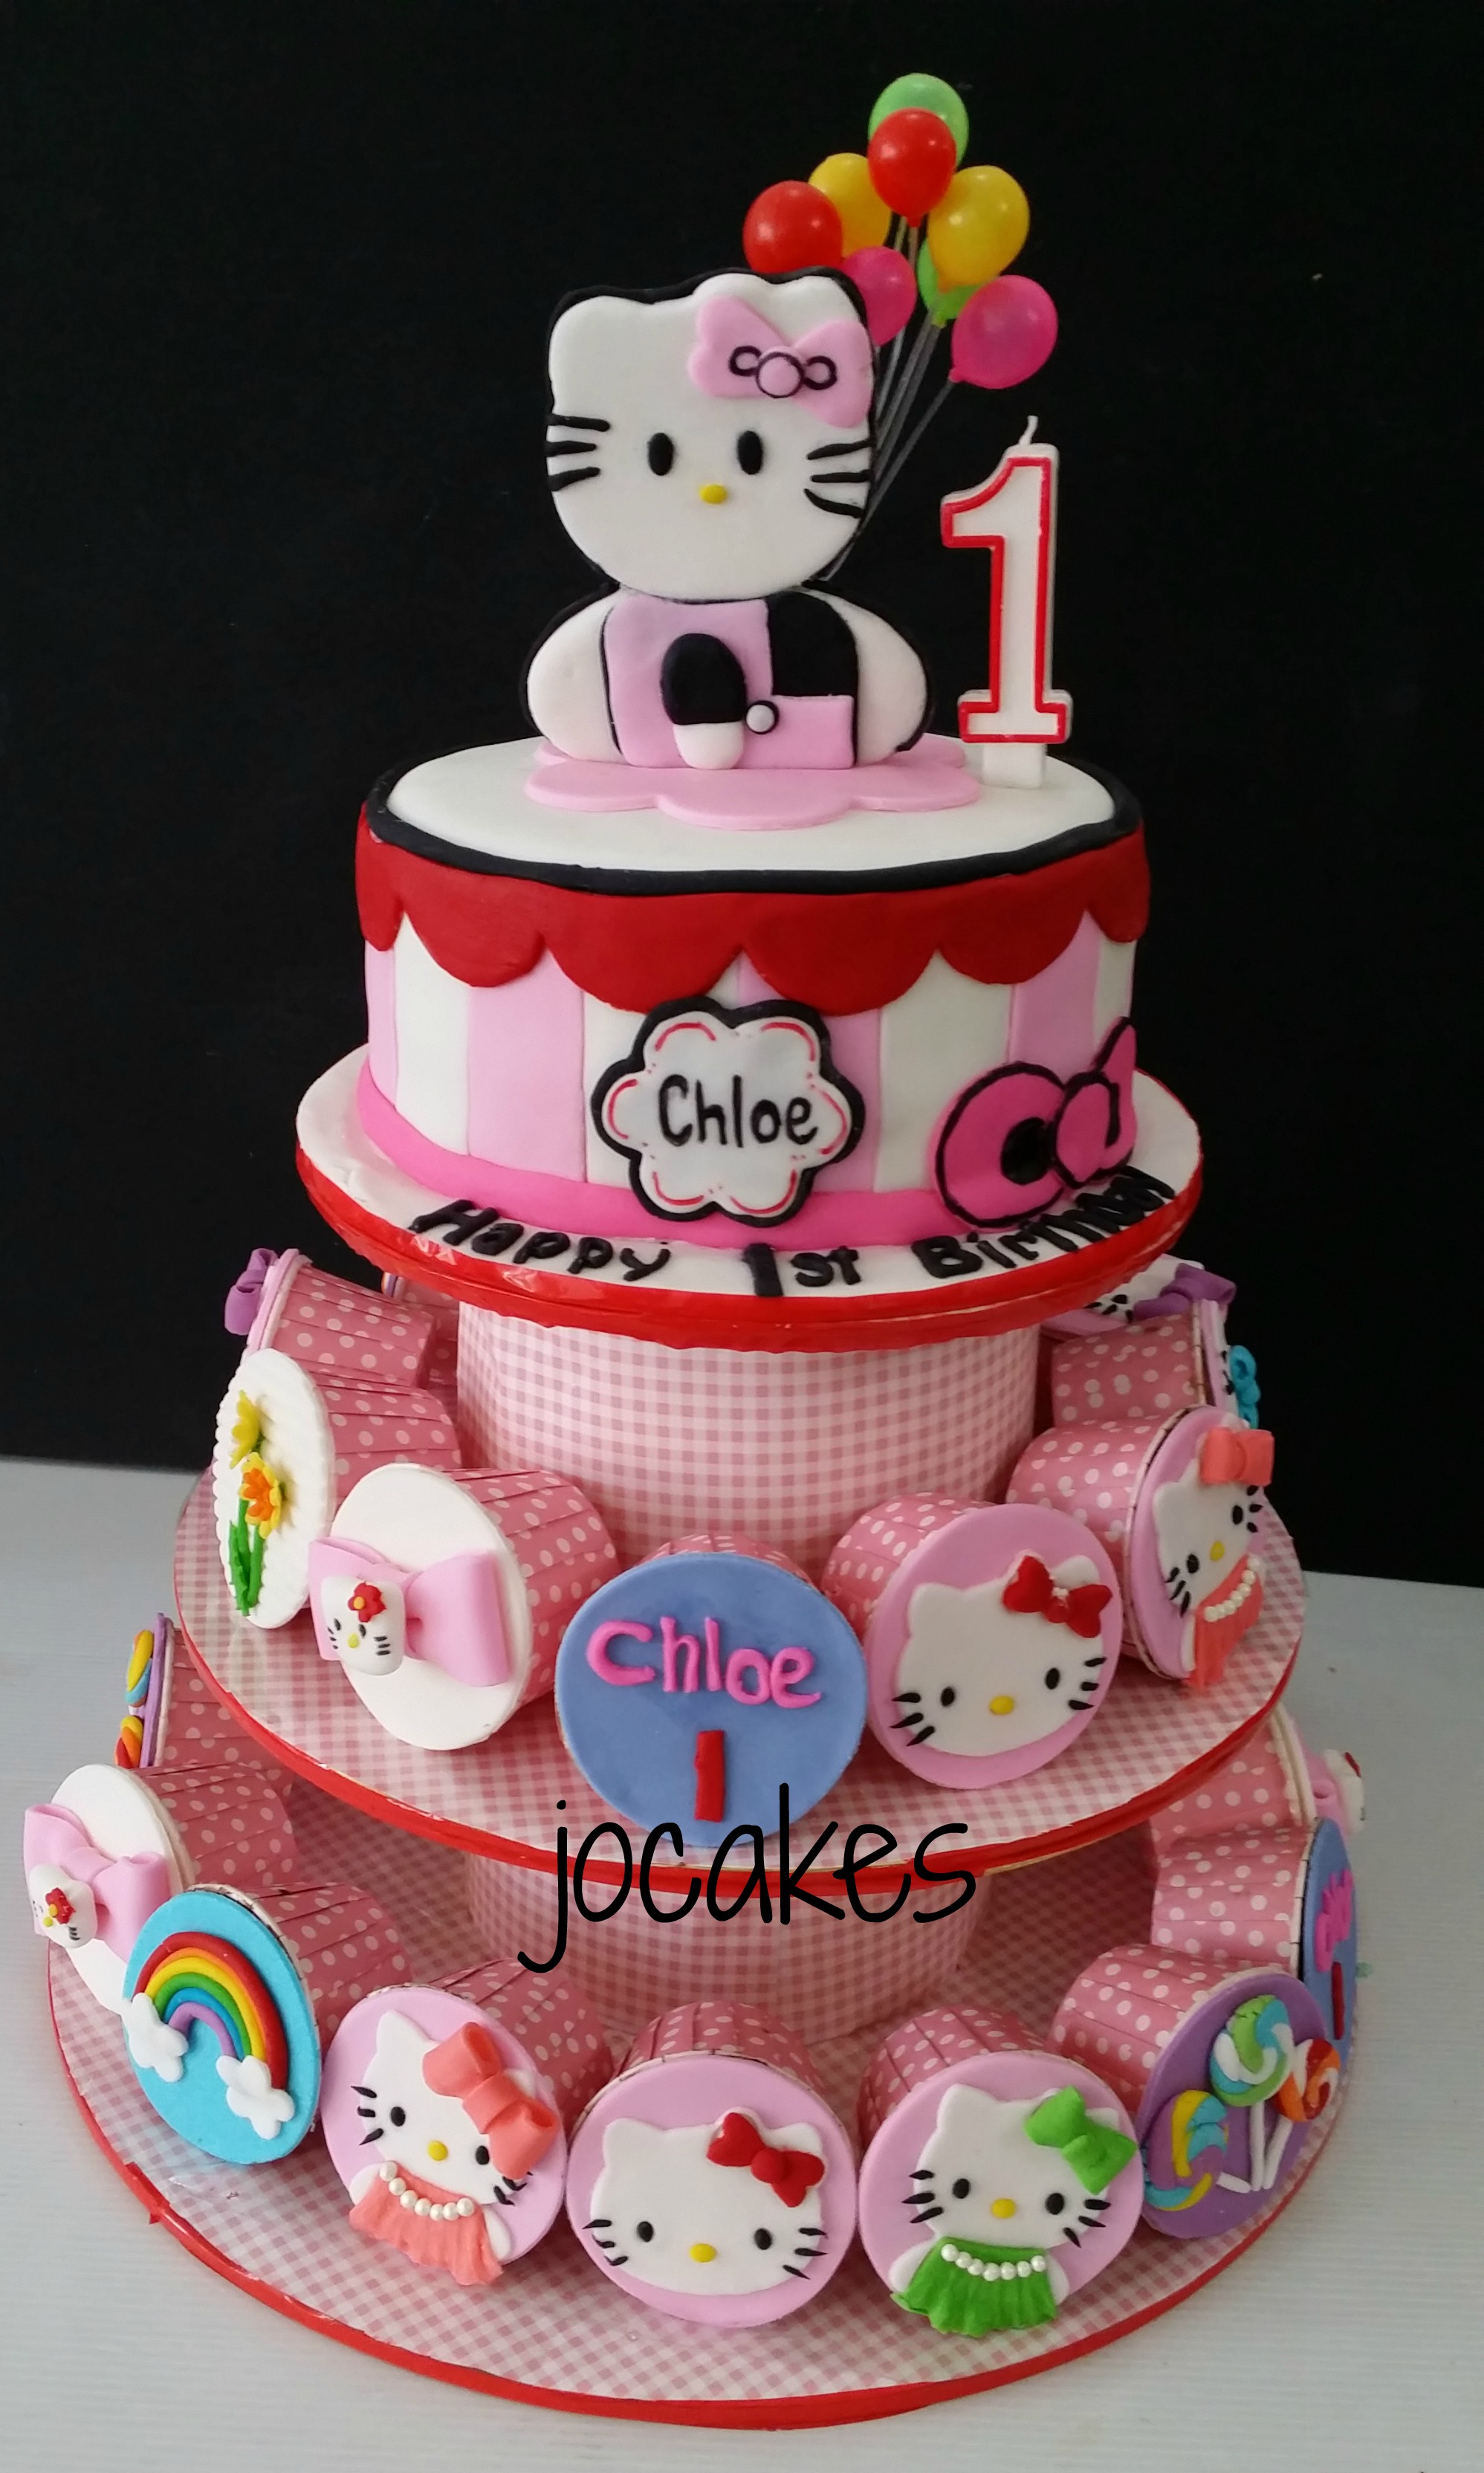 Hello Kitty Cake And Cupcakes For Chloe S 1st Birthday Jocakes